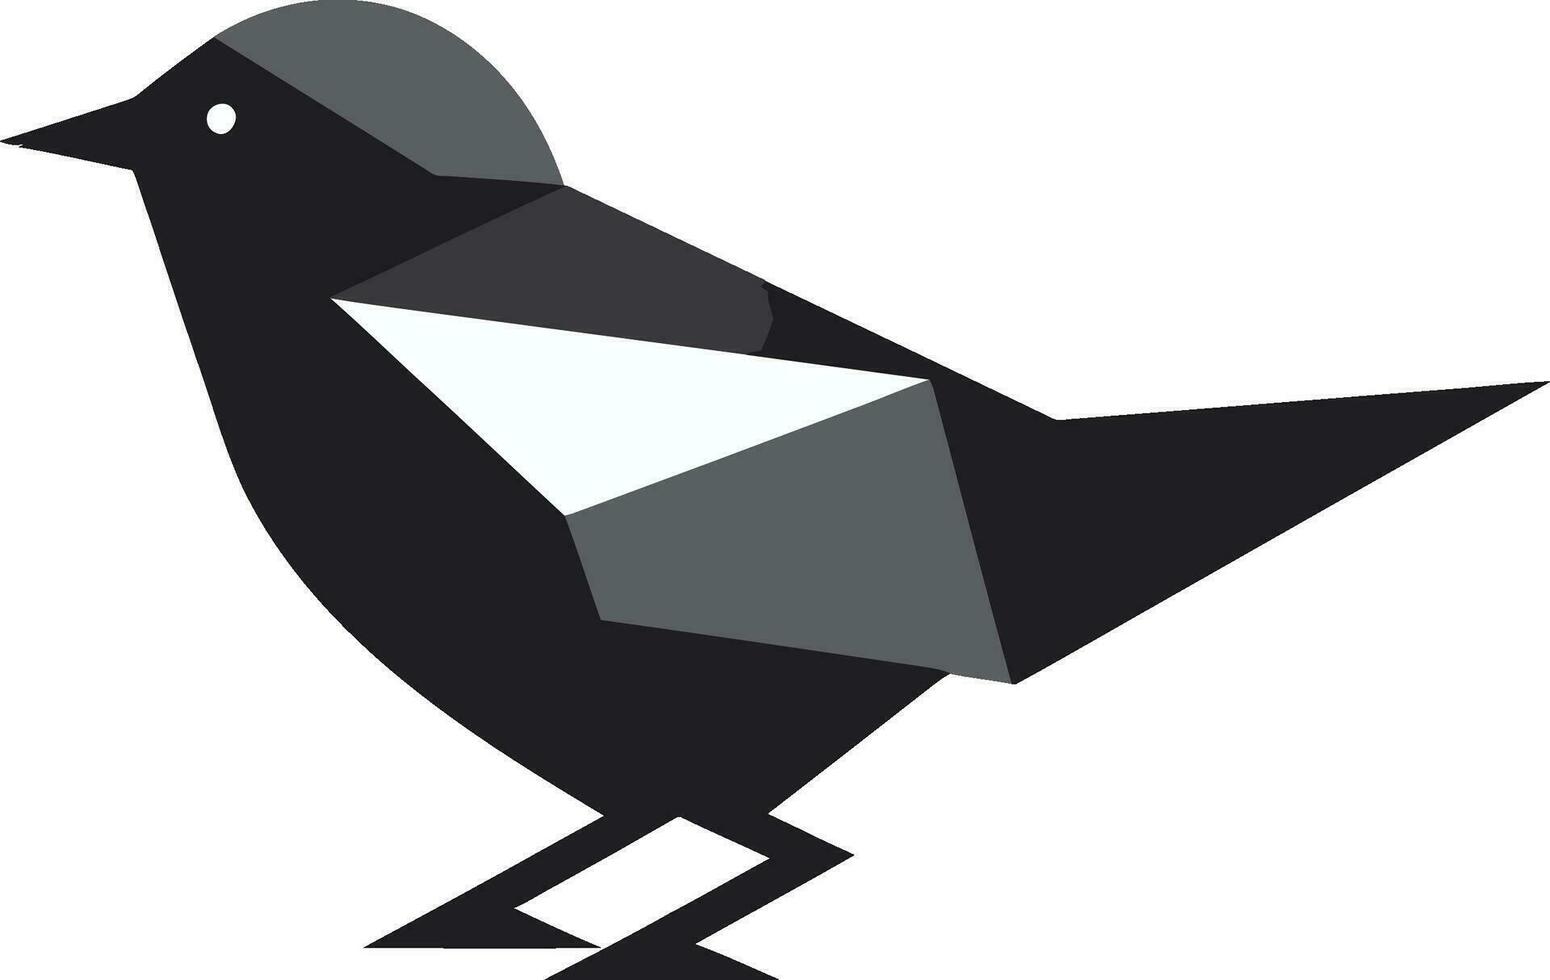 icônico pardal logotipo gracioso aviária emblema ébano excelência dentro voar emplumado domínio vetor